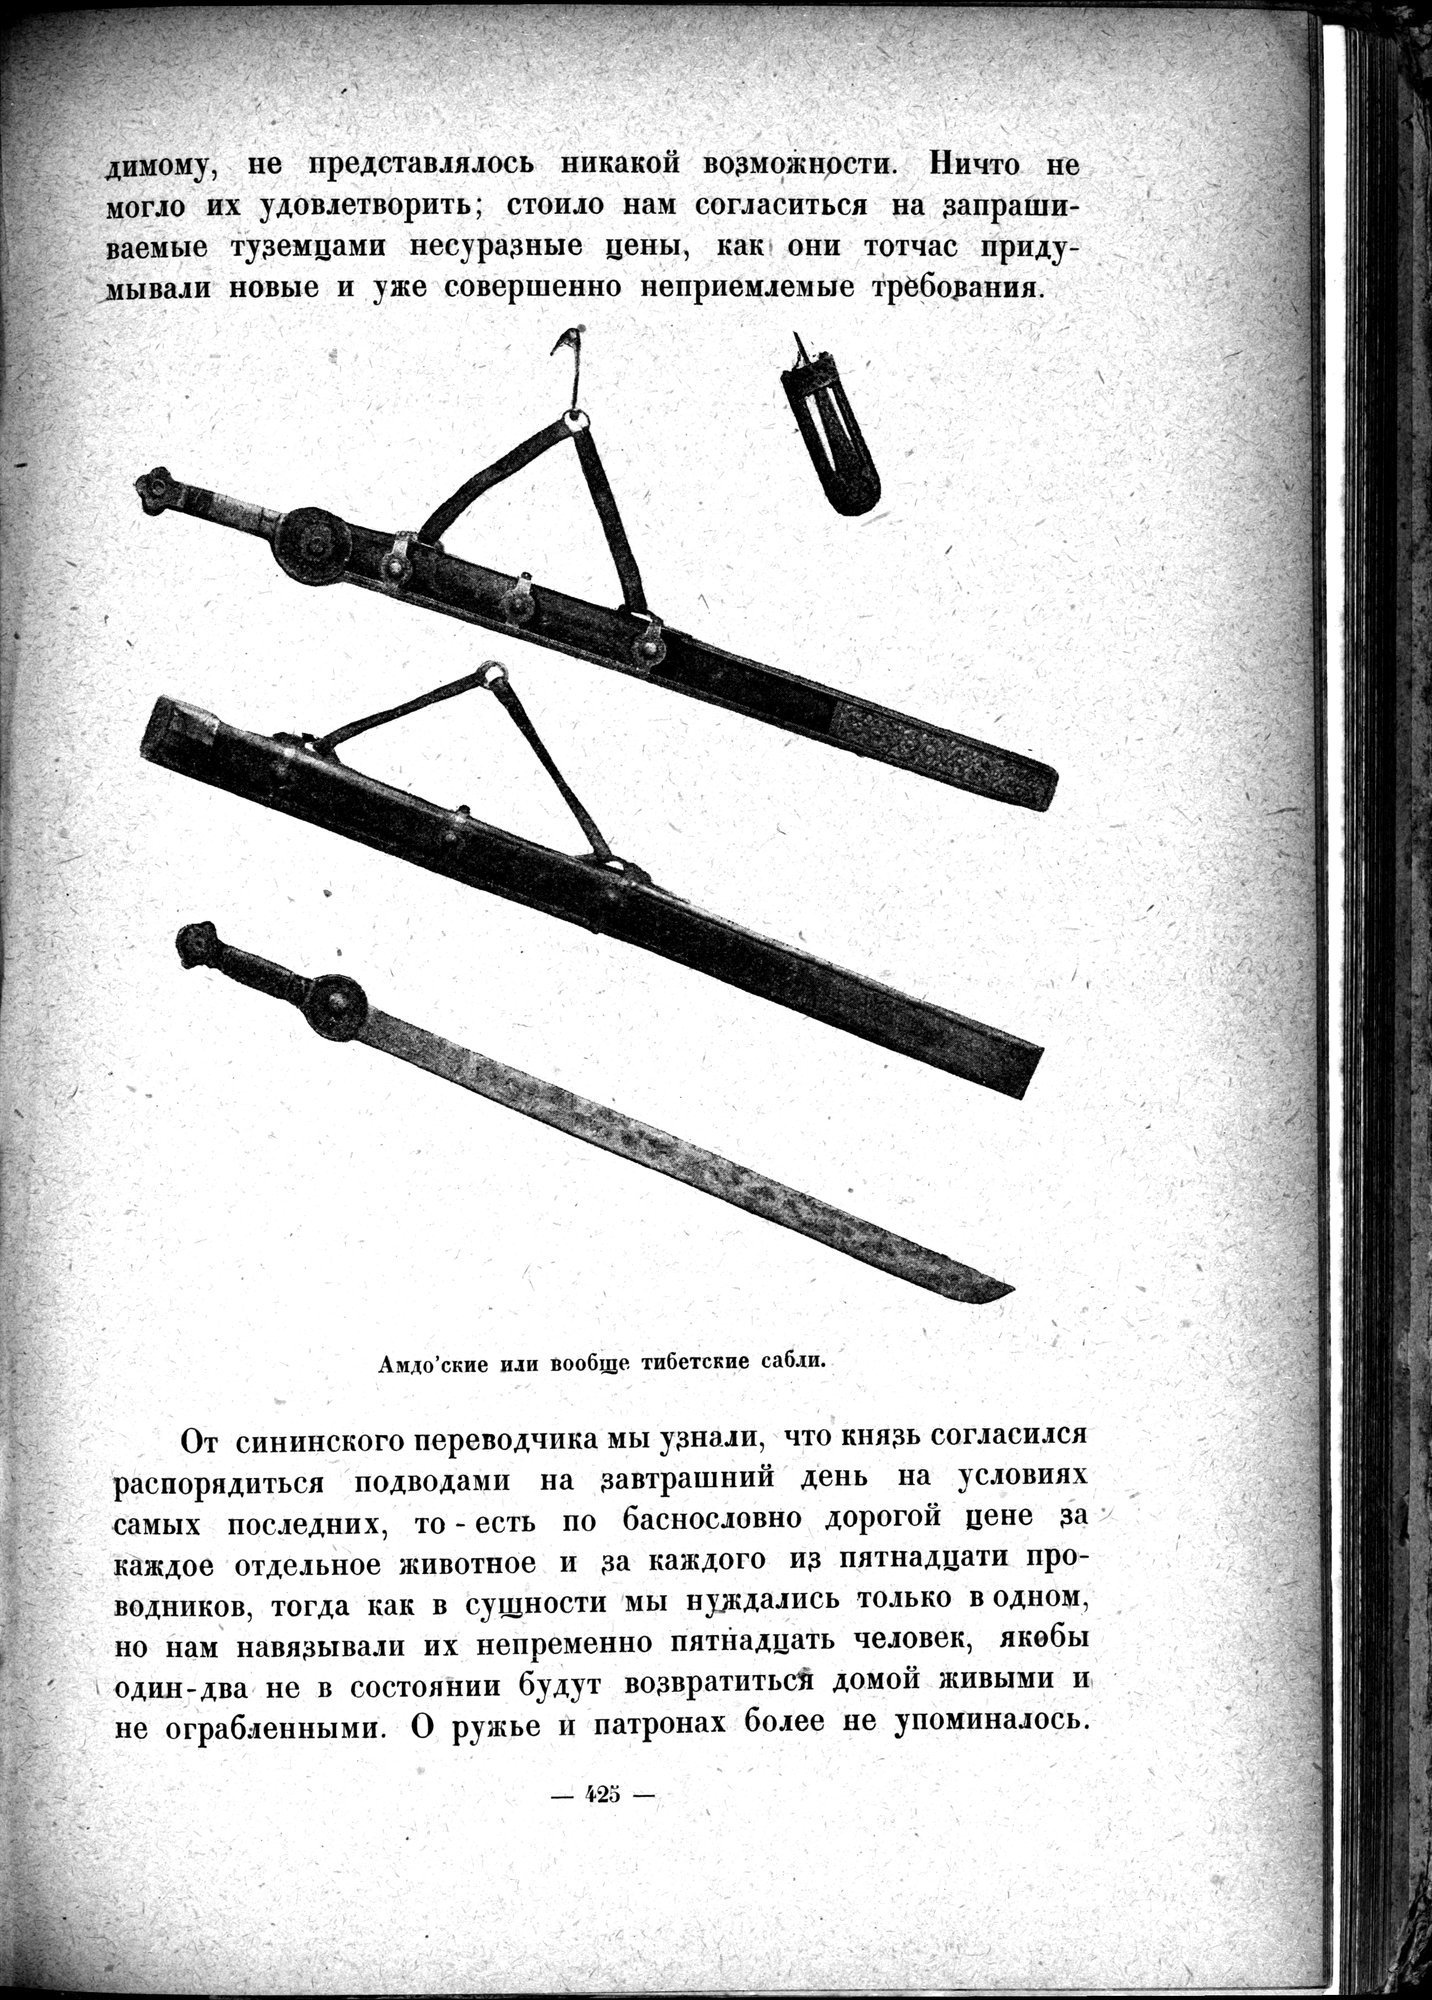 Mongoliya i Amdo i mertby gorod Khara-Khoto : vol.1 / Page 487 (Grayscale High Resolution Image)